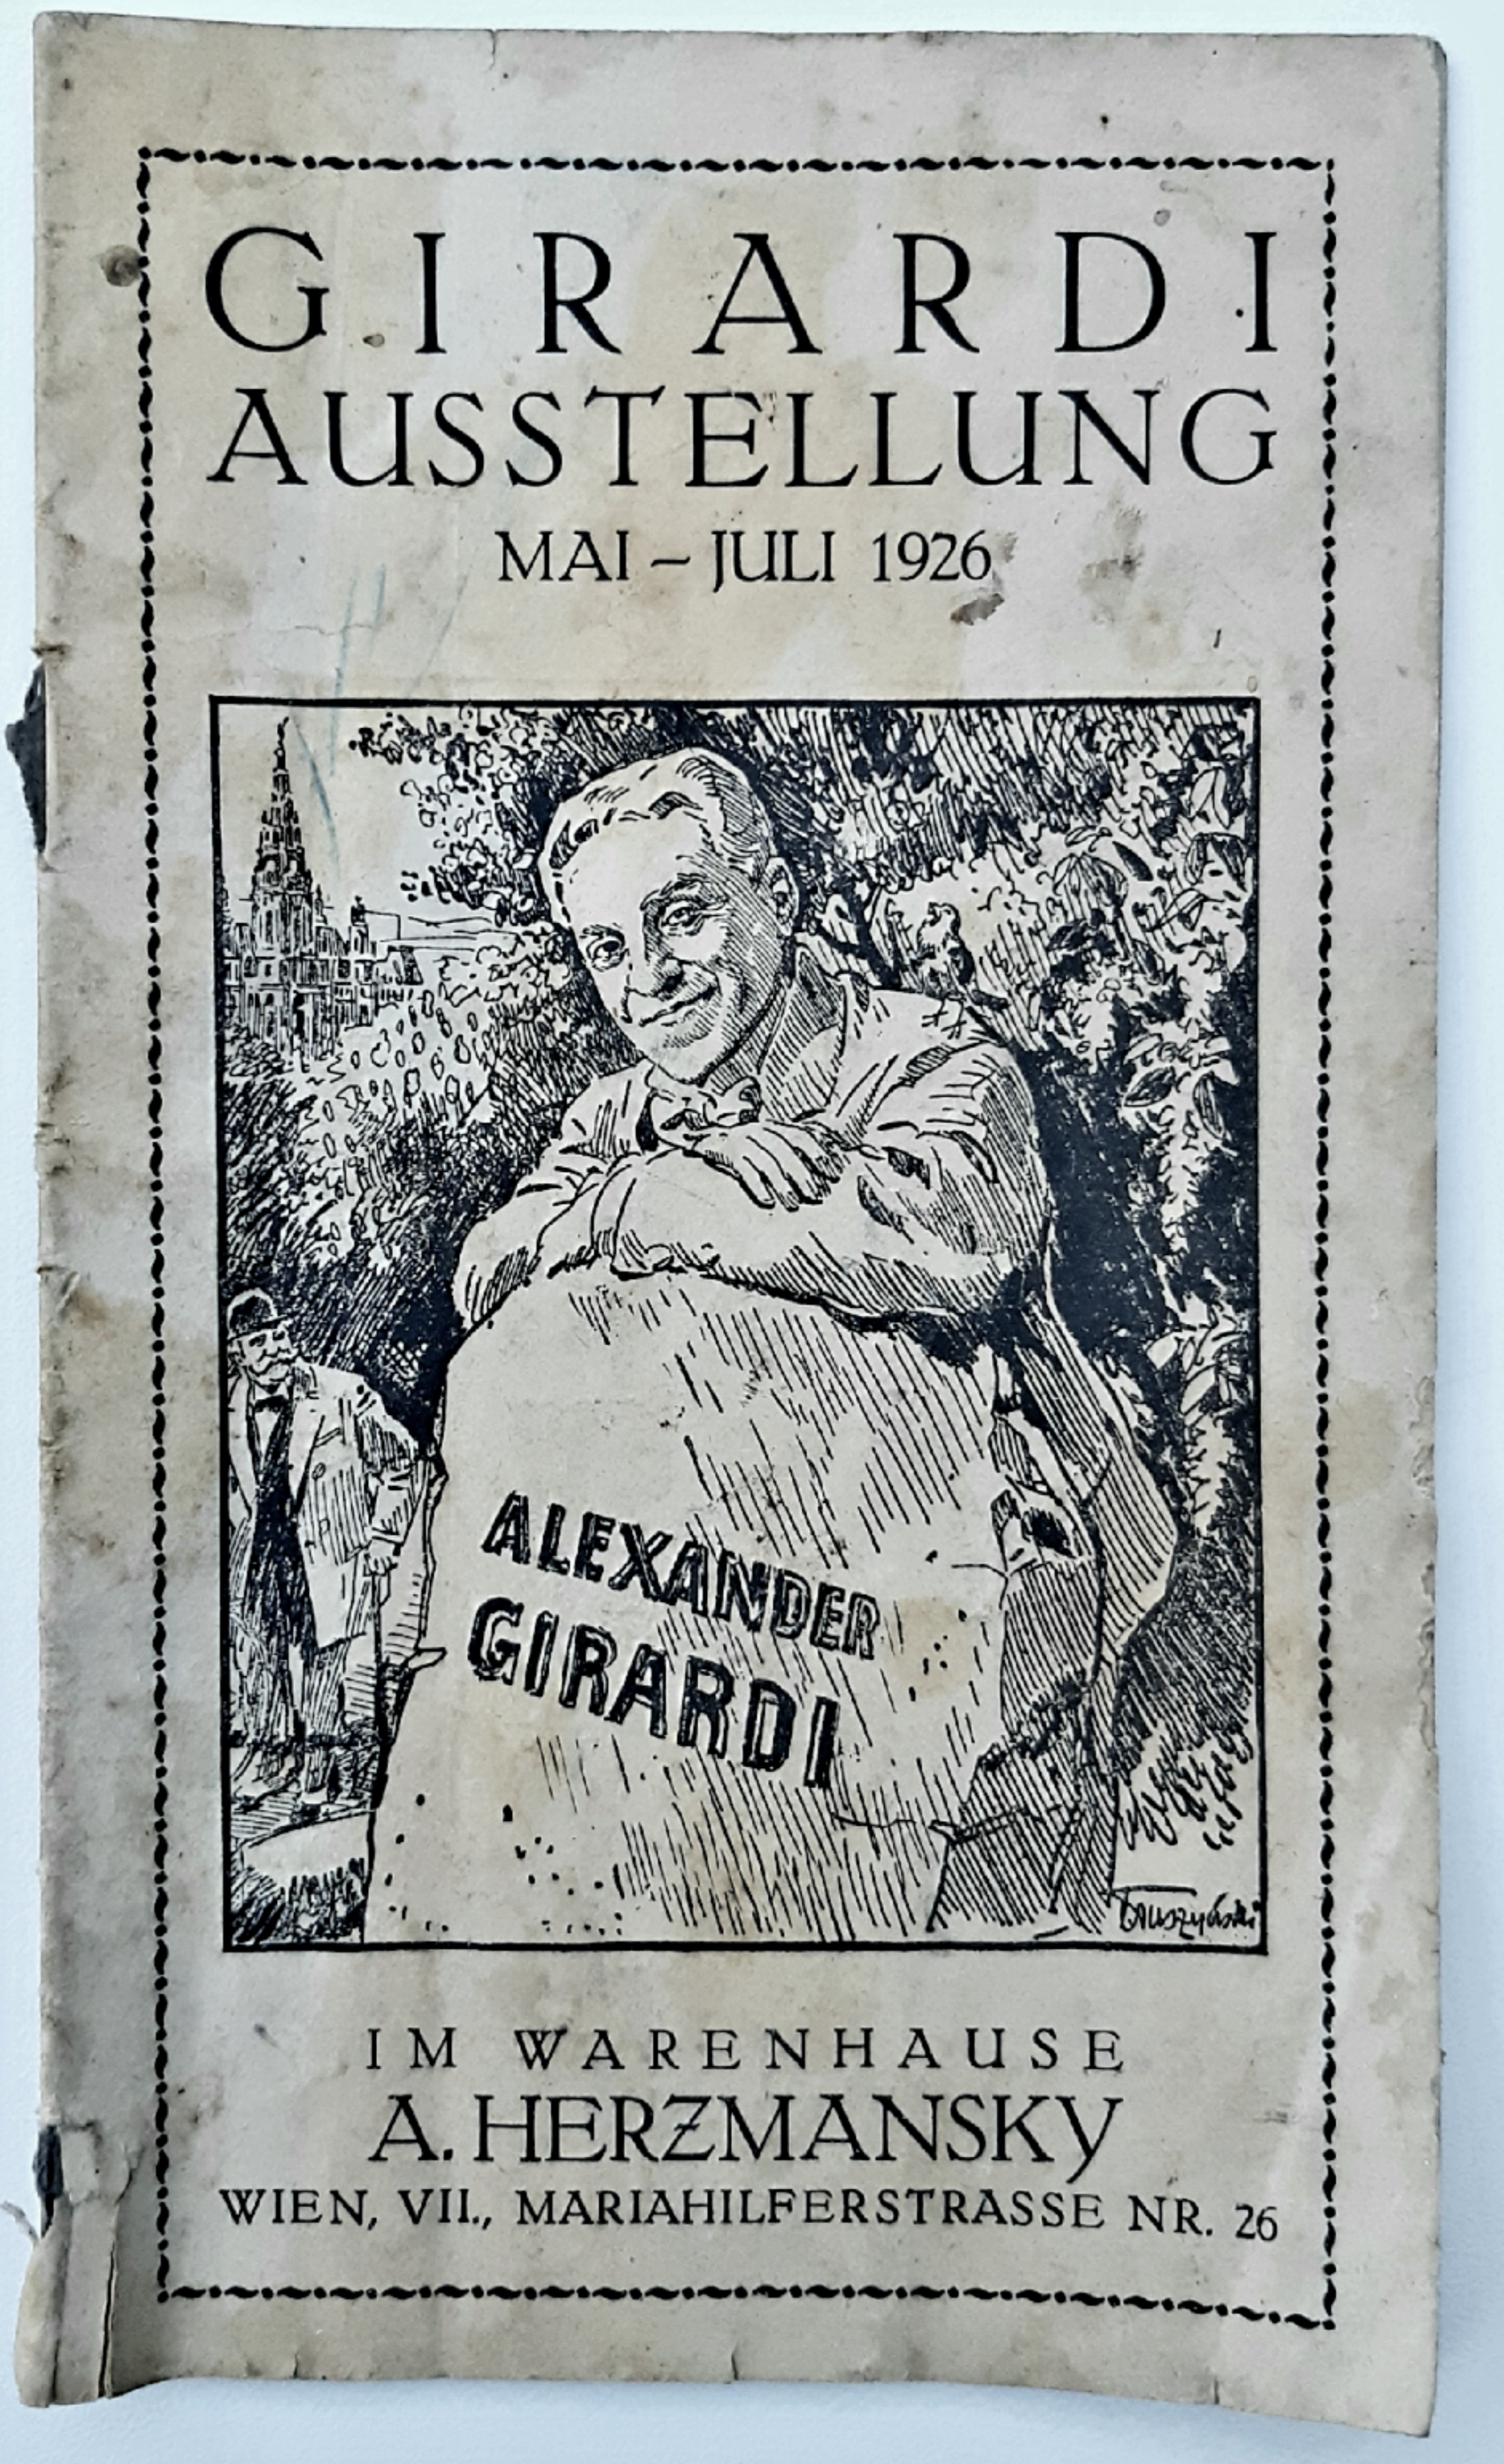 Broschüre zur "Girardi Ausstellung", Mai-Juli 1926